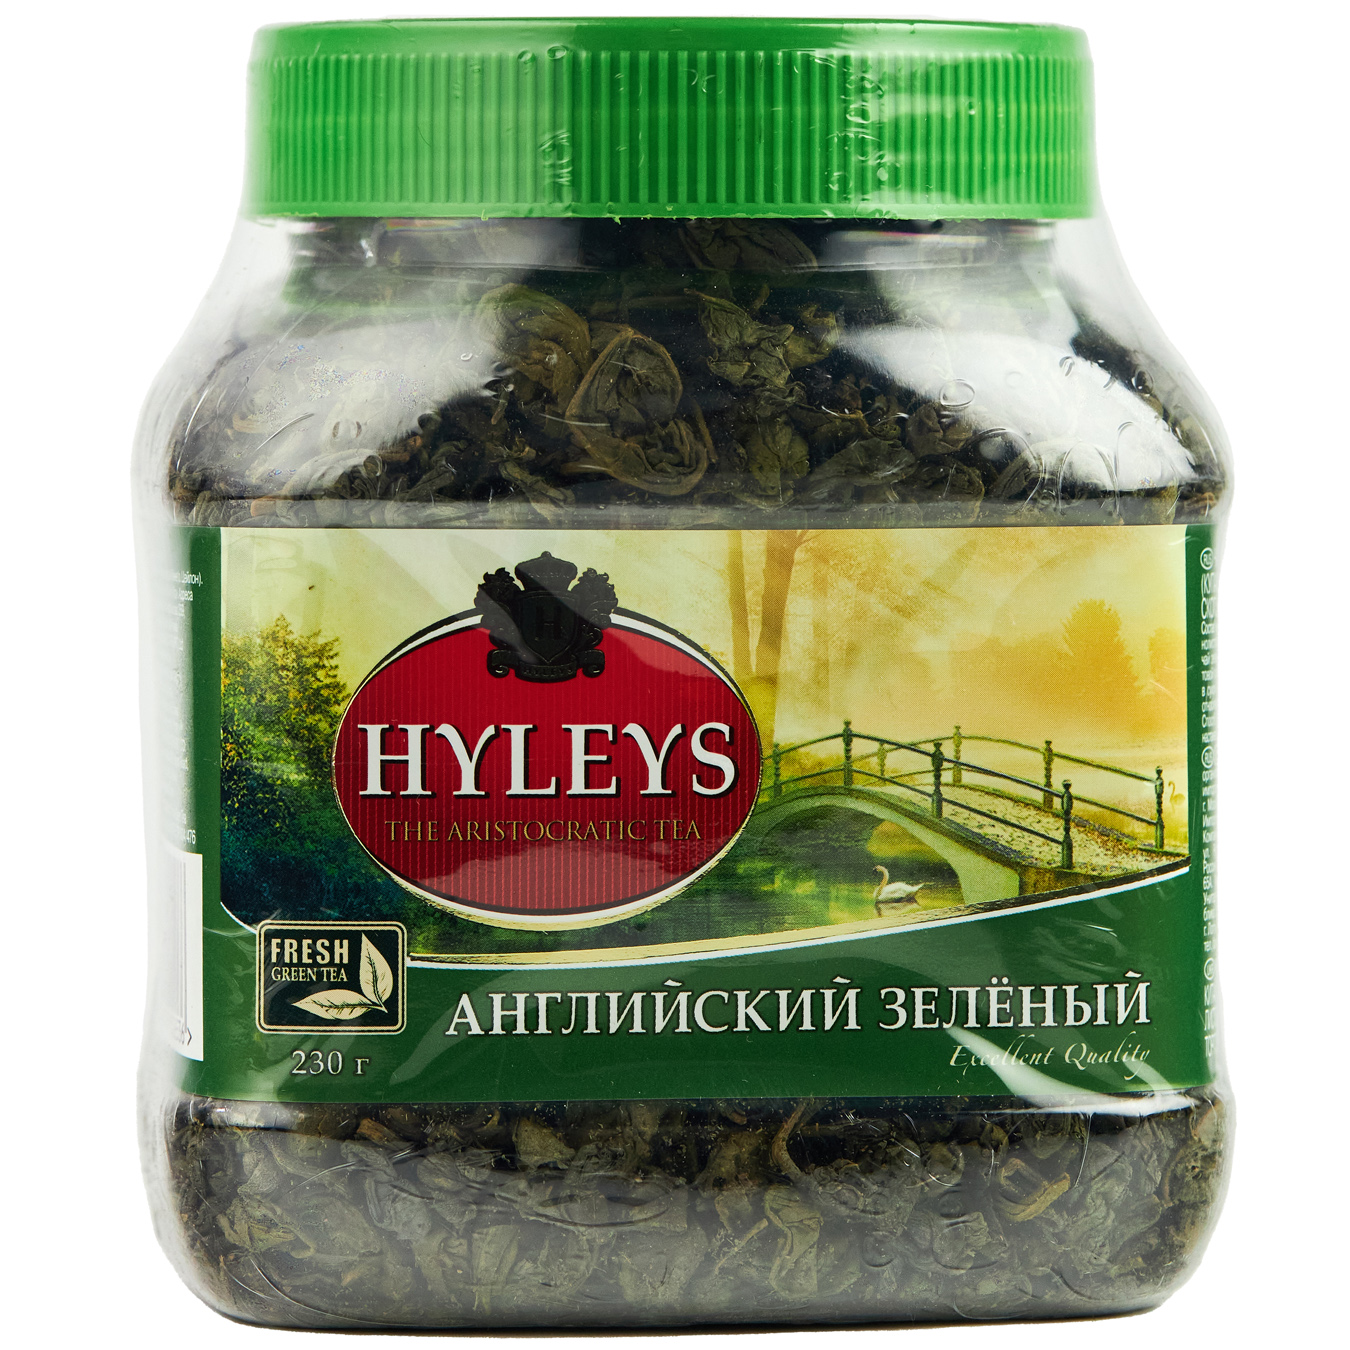 Hyleys English green loose tea 230g